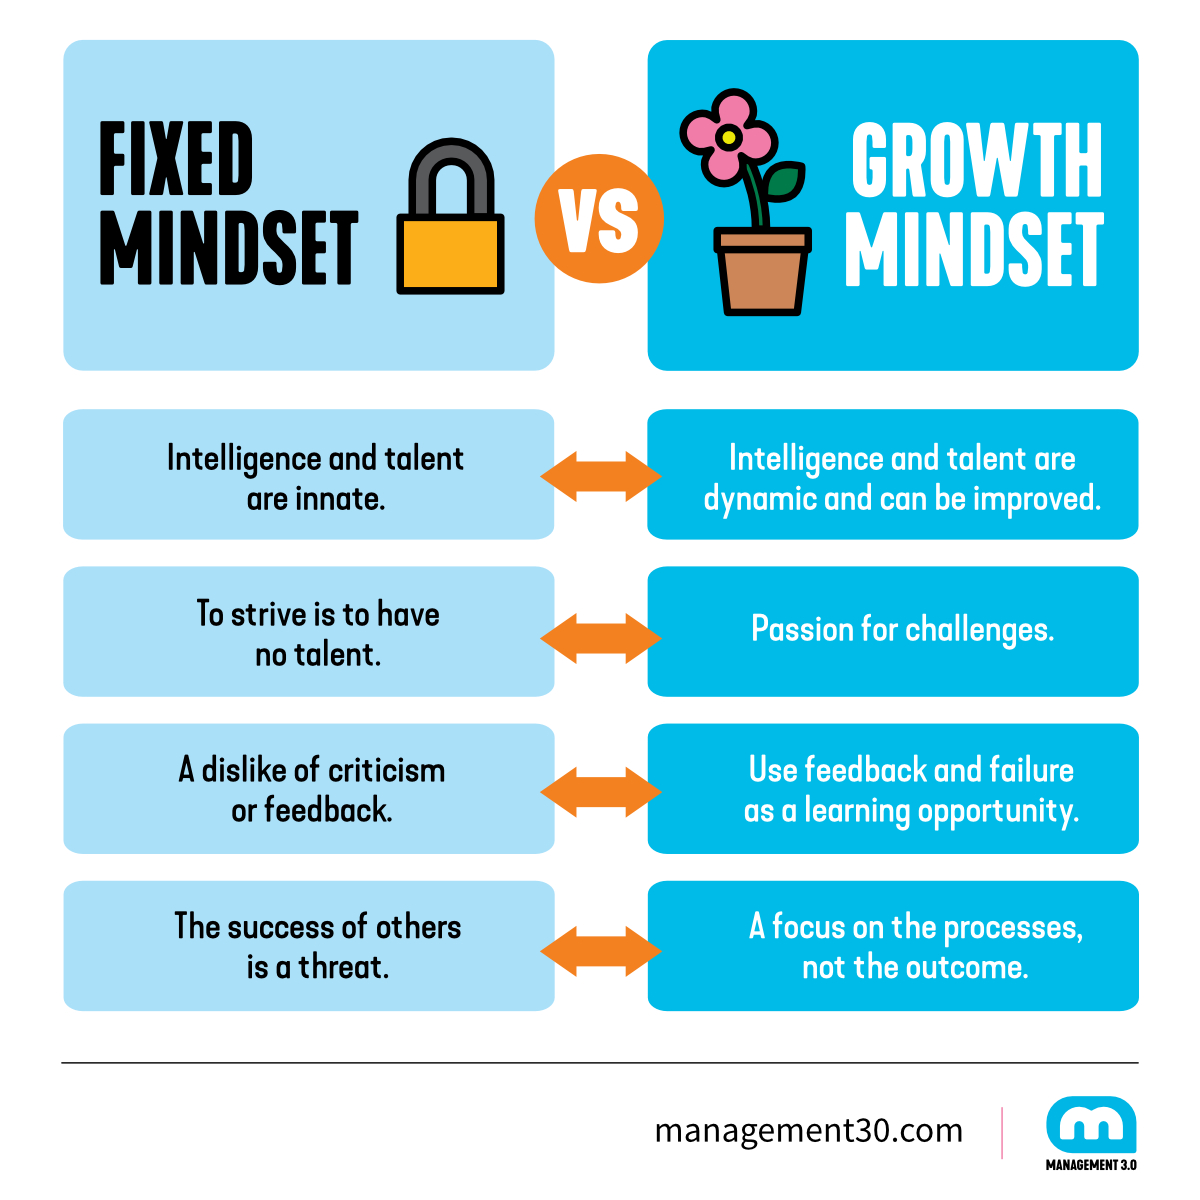 Focus mindset cultivation